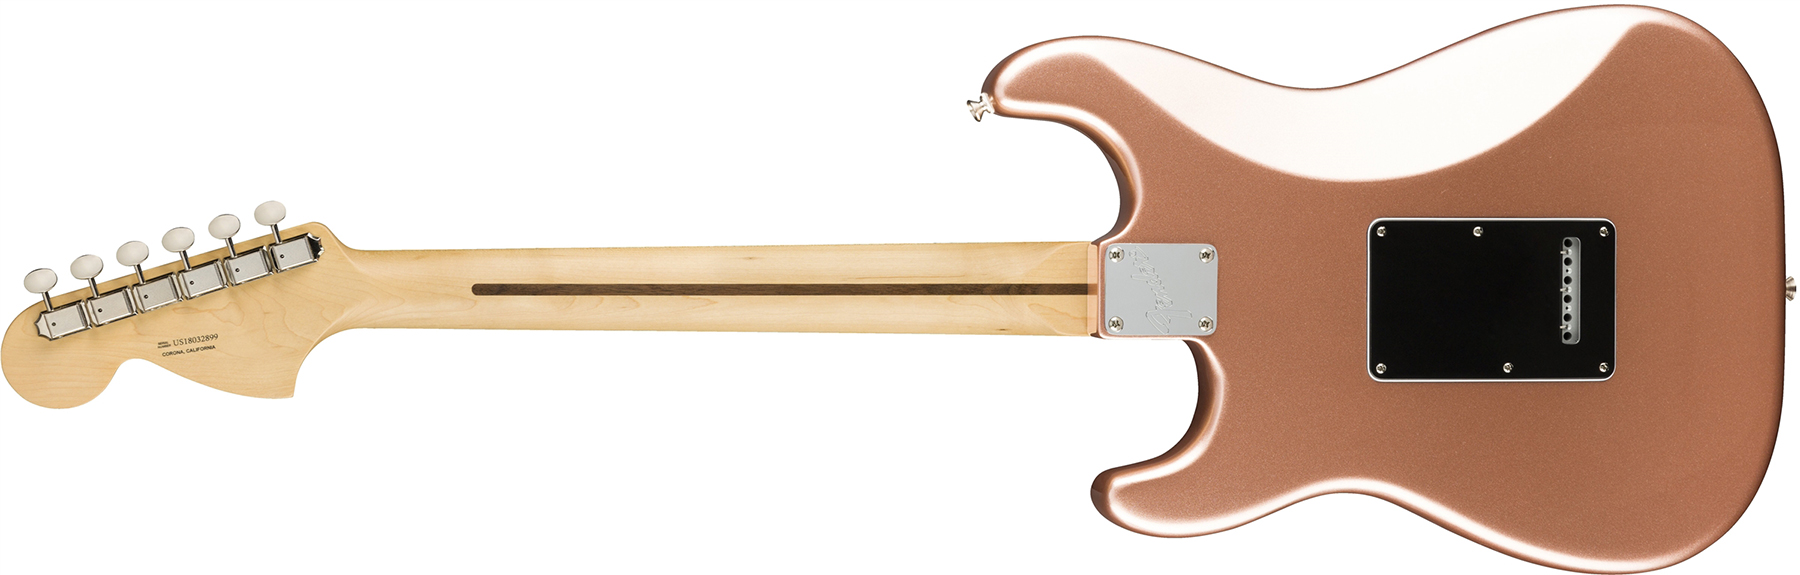 Fender Strat American Performer Usa Sss Mn - Penny - Guitarra eléctrica con forma de str. - Variation 2